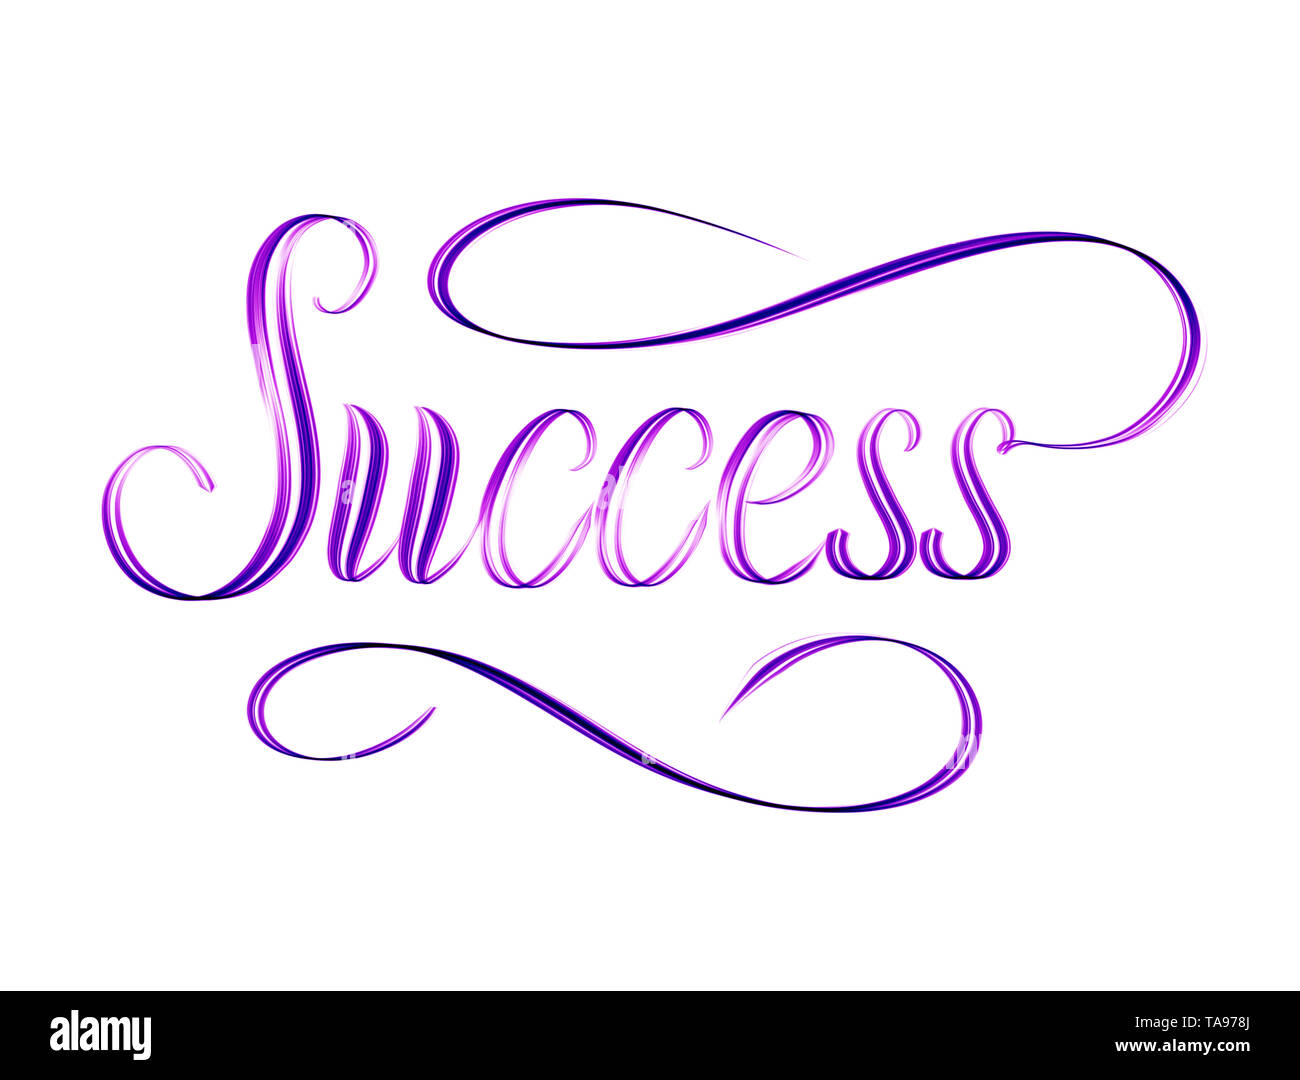 The word Success written in script - elegant motivational hand lettering Stock Photo